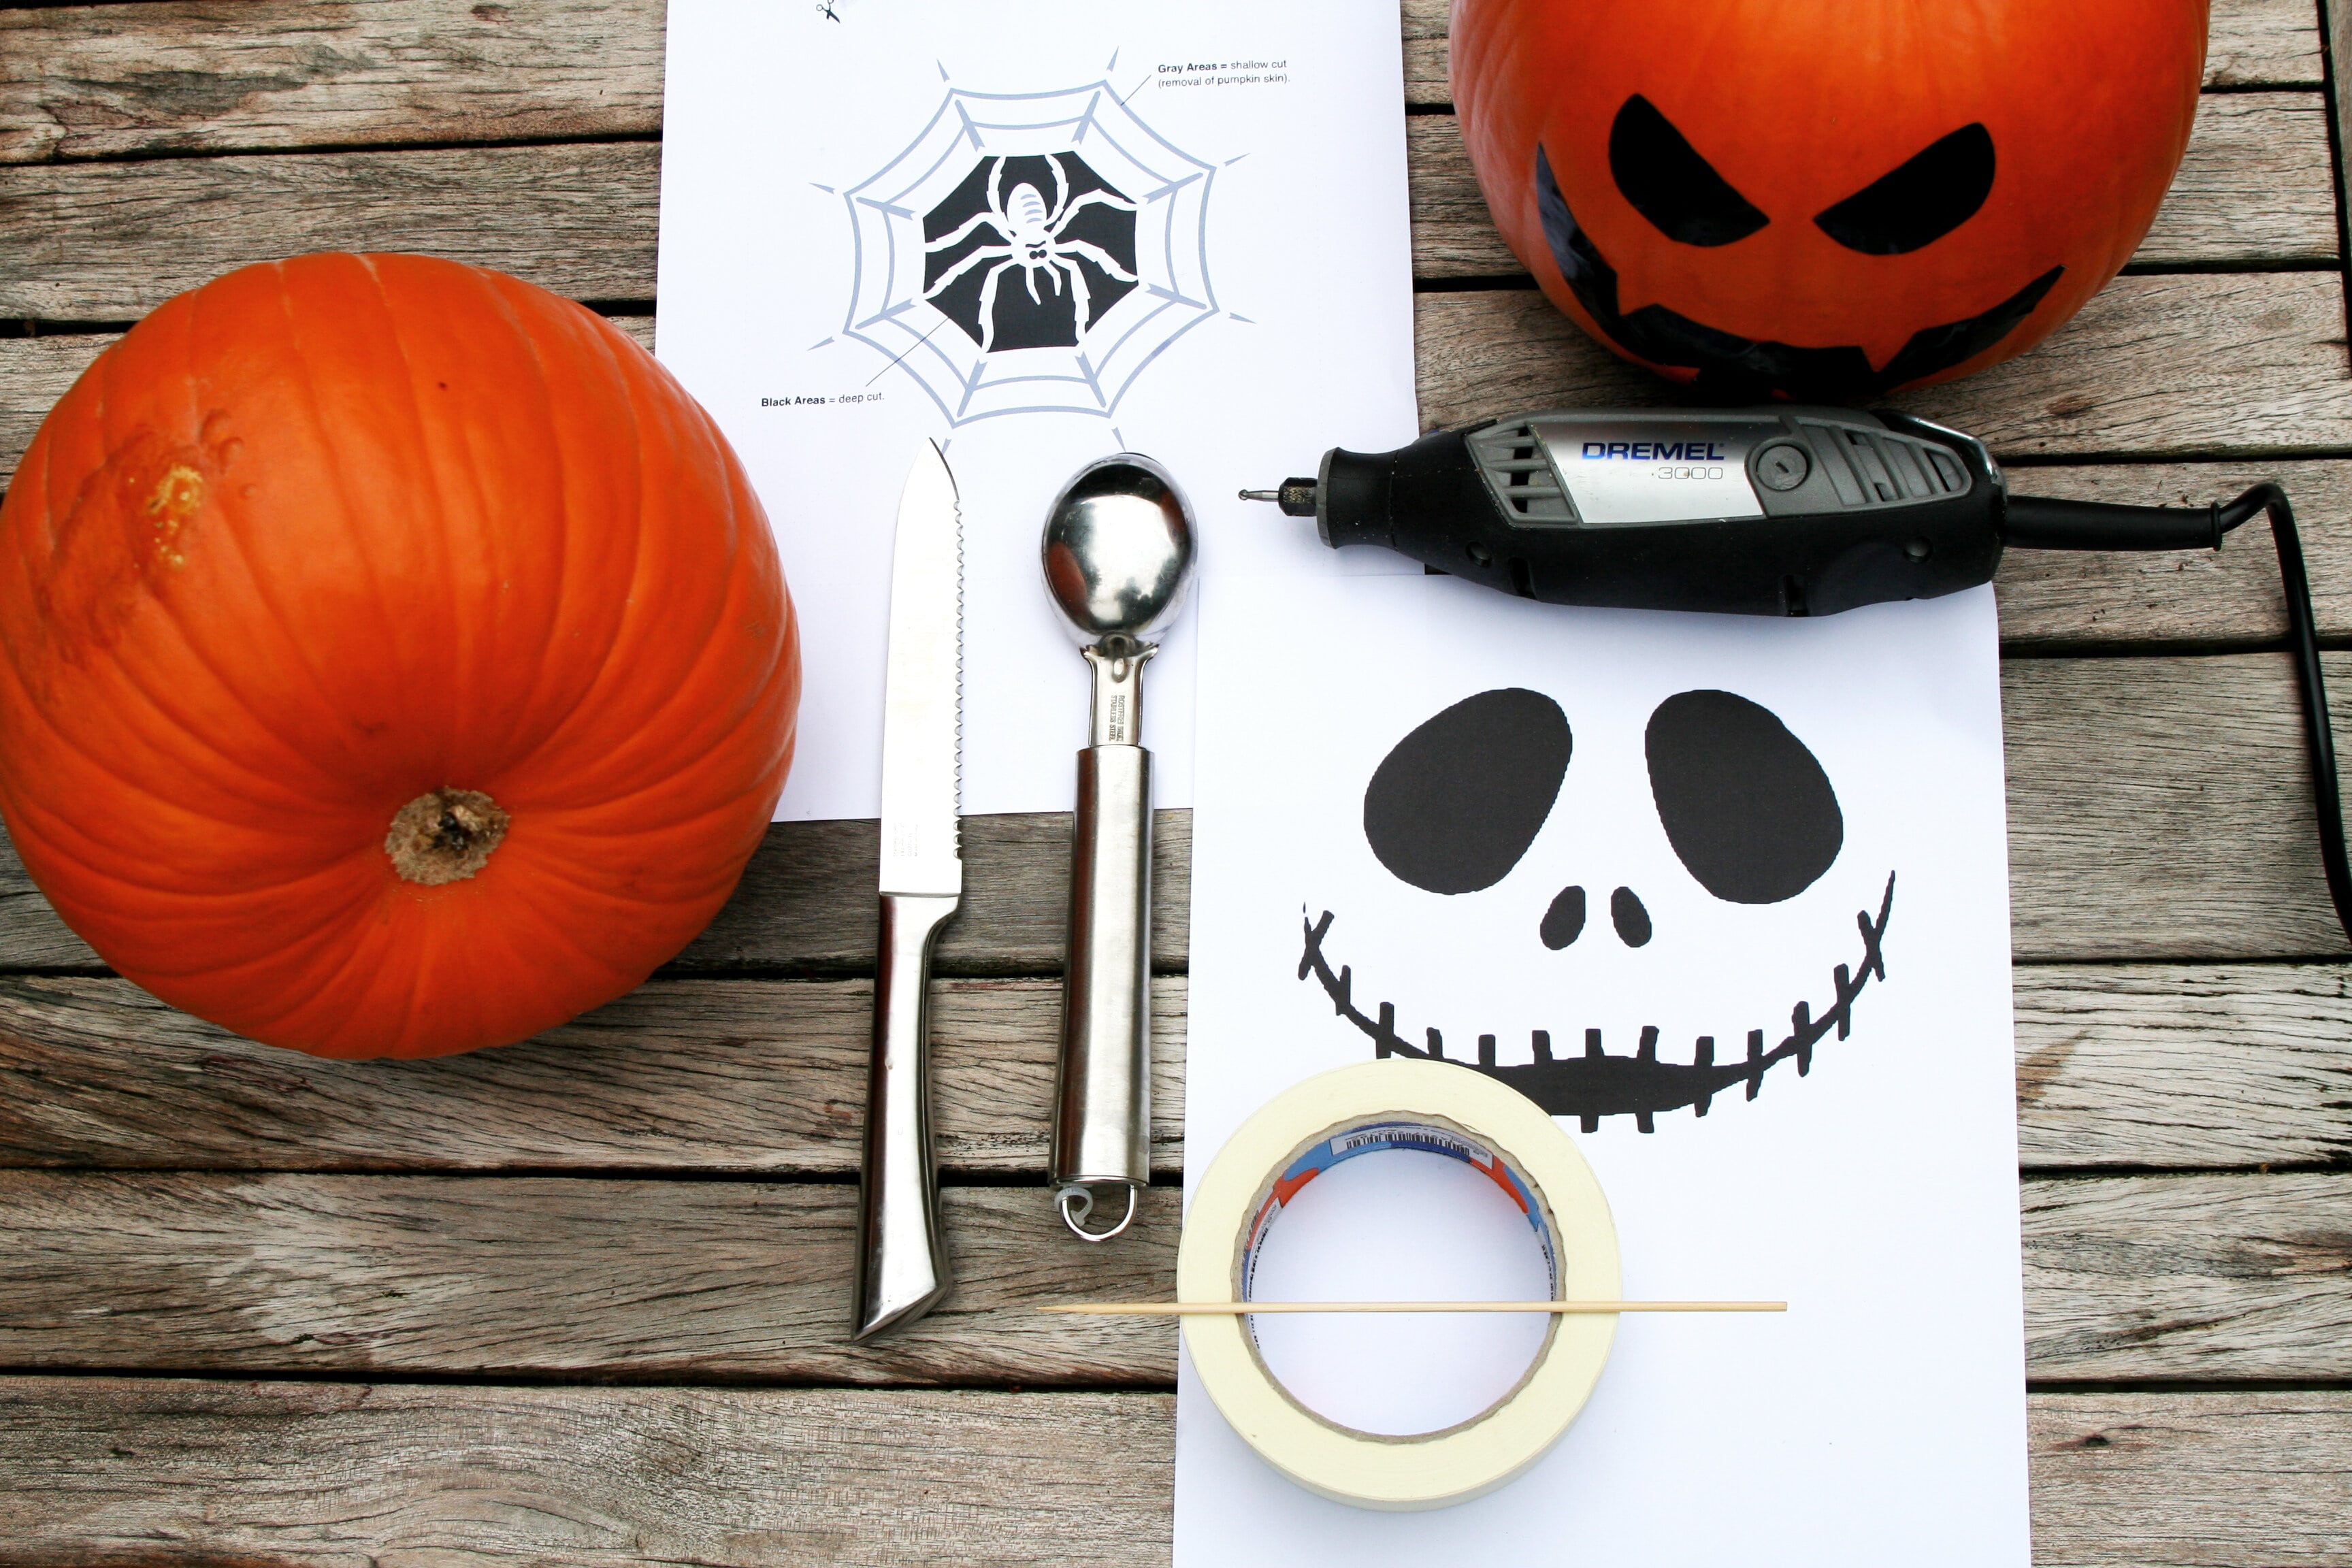 an image of a pumpkin and pumpkin carving tools